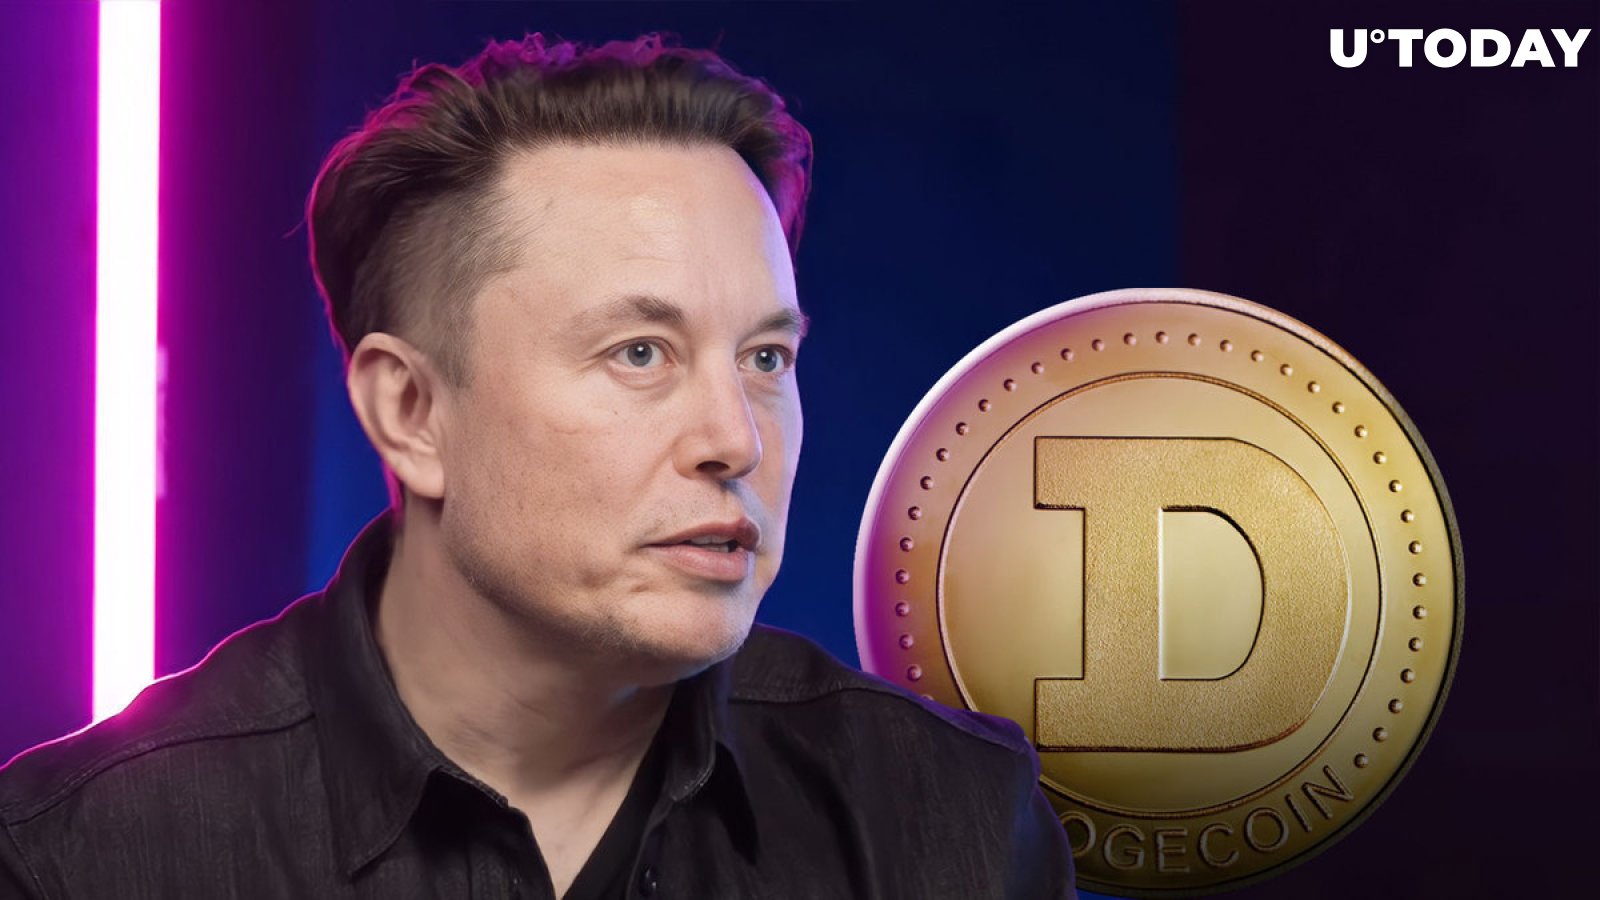 “New gold”: Dogecoin founder responds to Elon Musk's tweet, hinting at Bitcoin